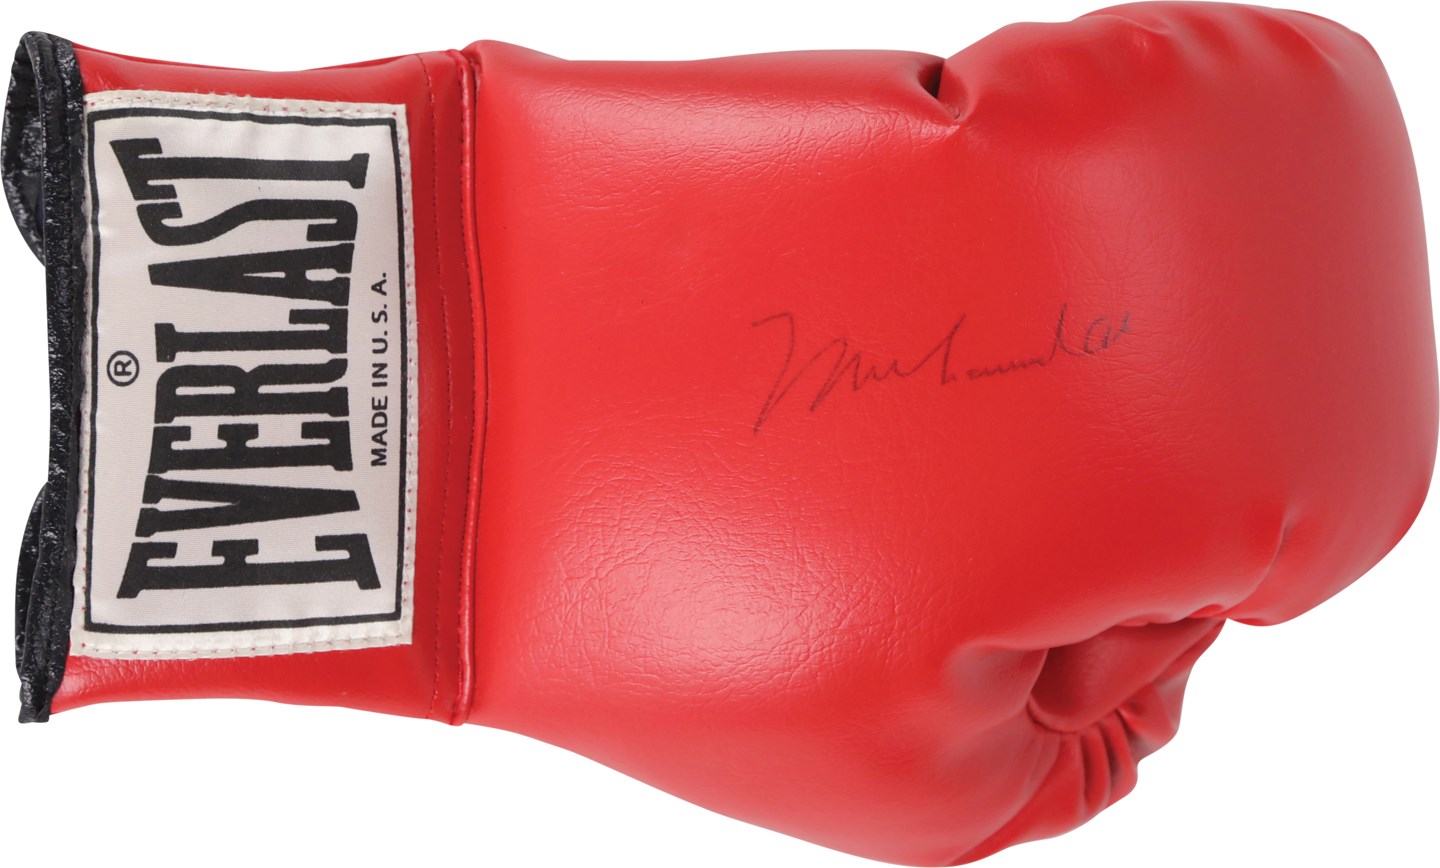 Muhammad Ali Vintage Signed Boxing Glove (PSA)